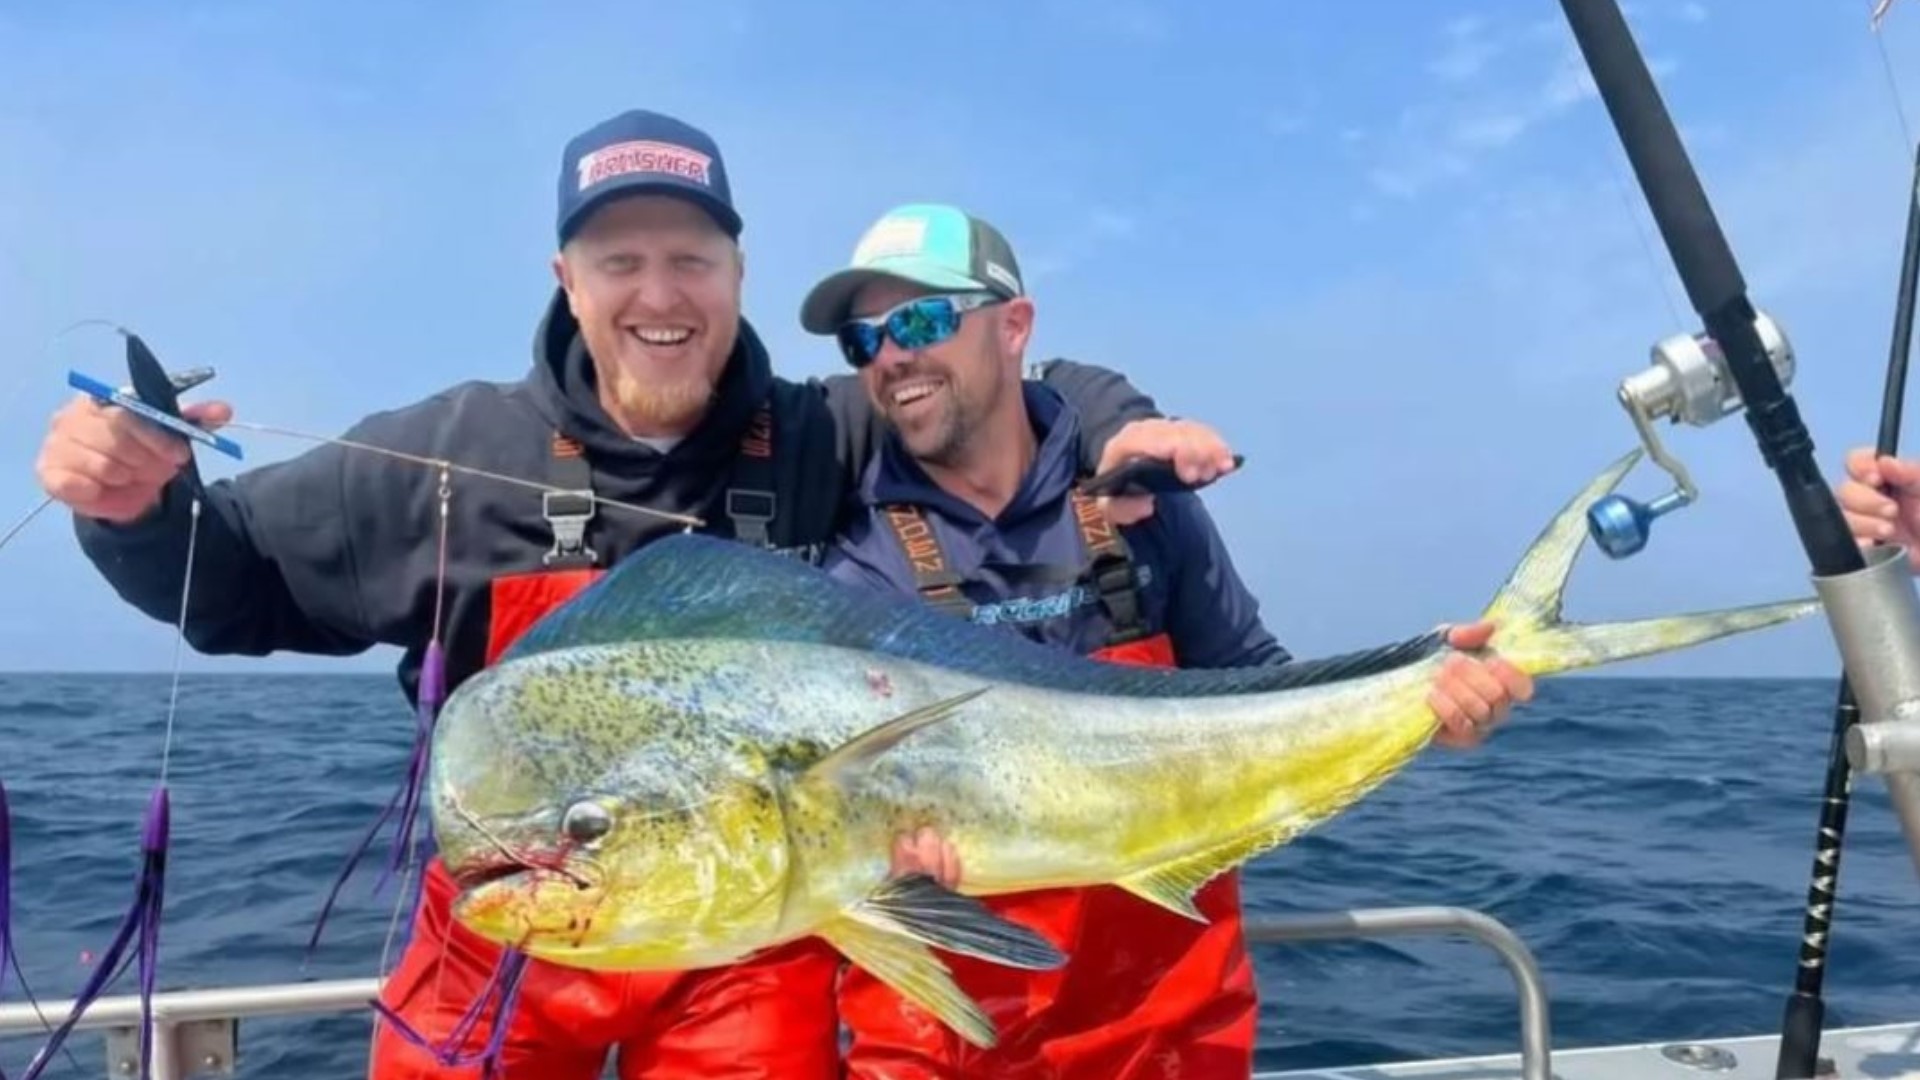 Angler Wade La Fontaine, from Camino Island, caught a new state record mahi mahi off the coast near Westport.